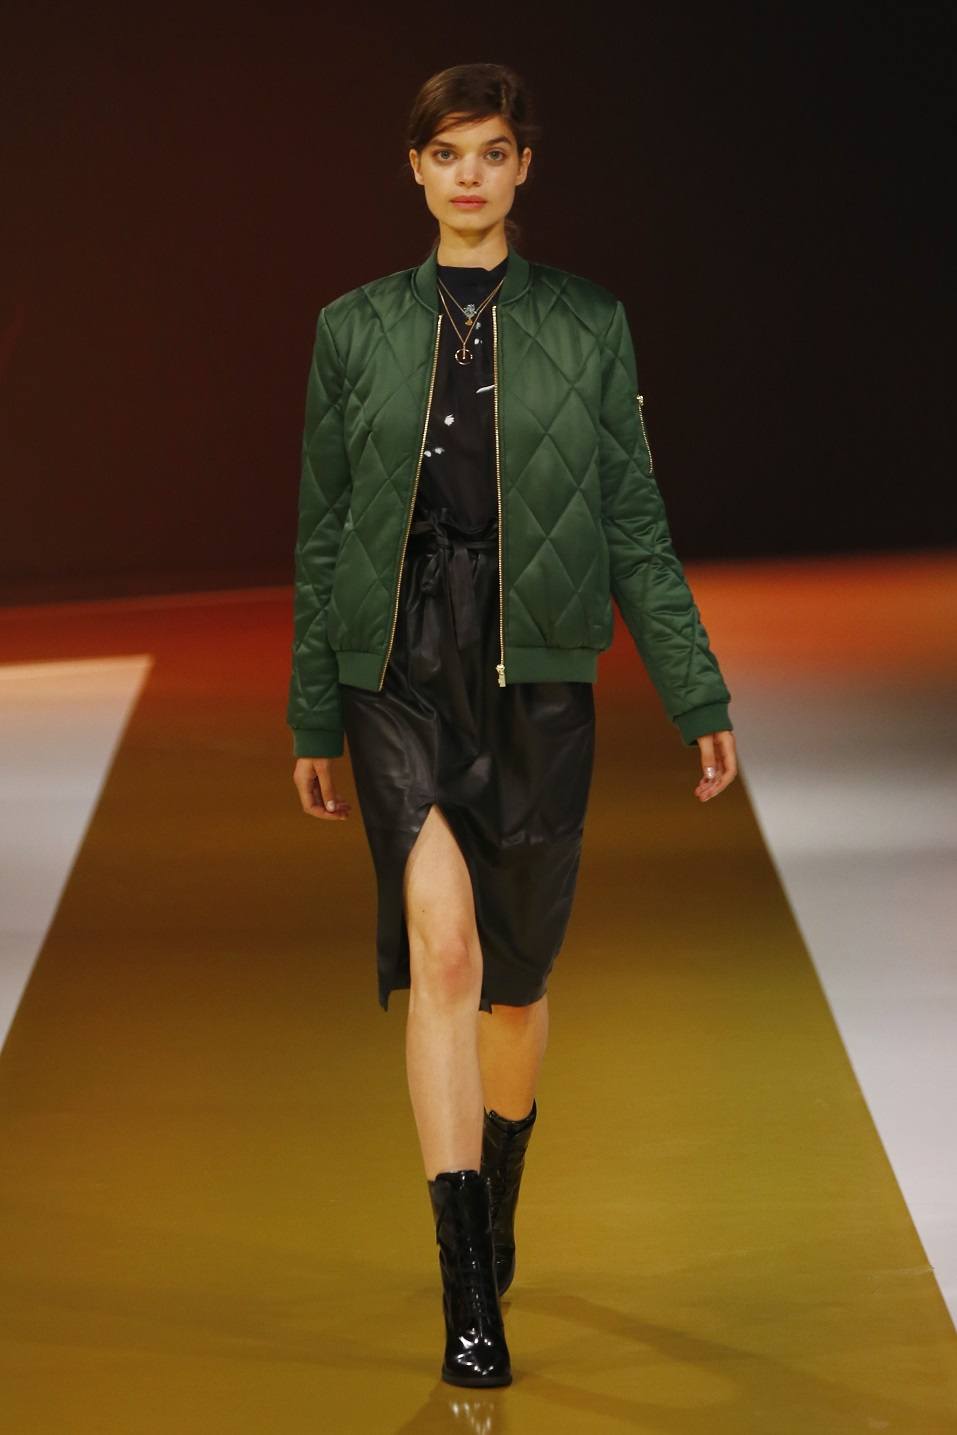 A model walks the runway at the Zalando fashion show